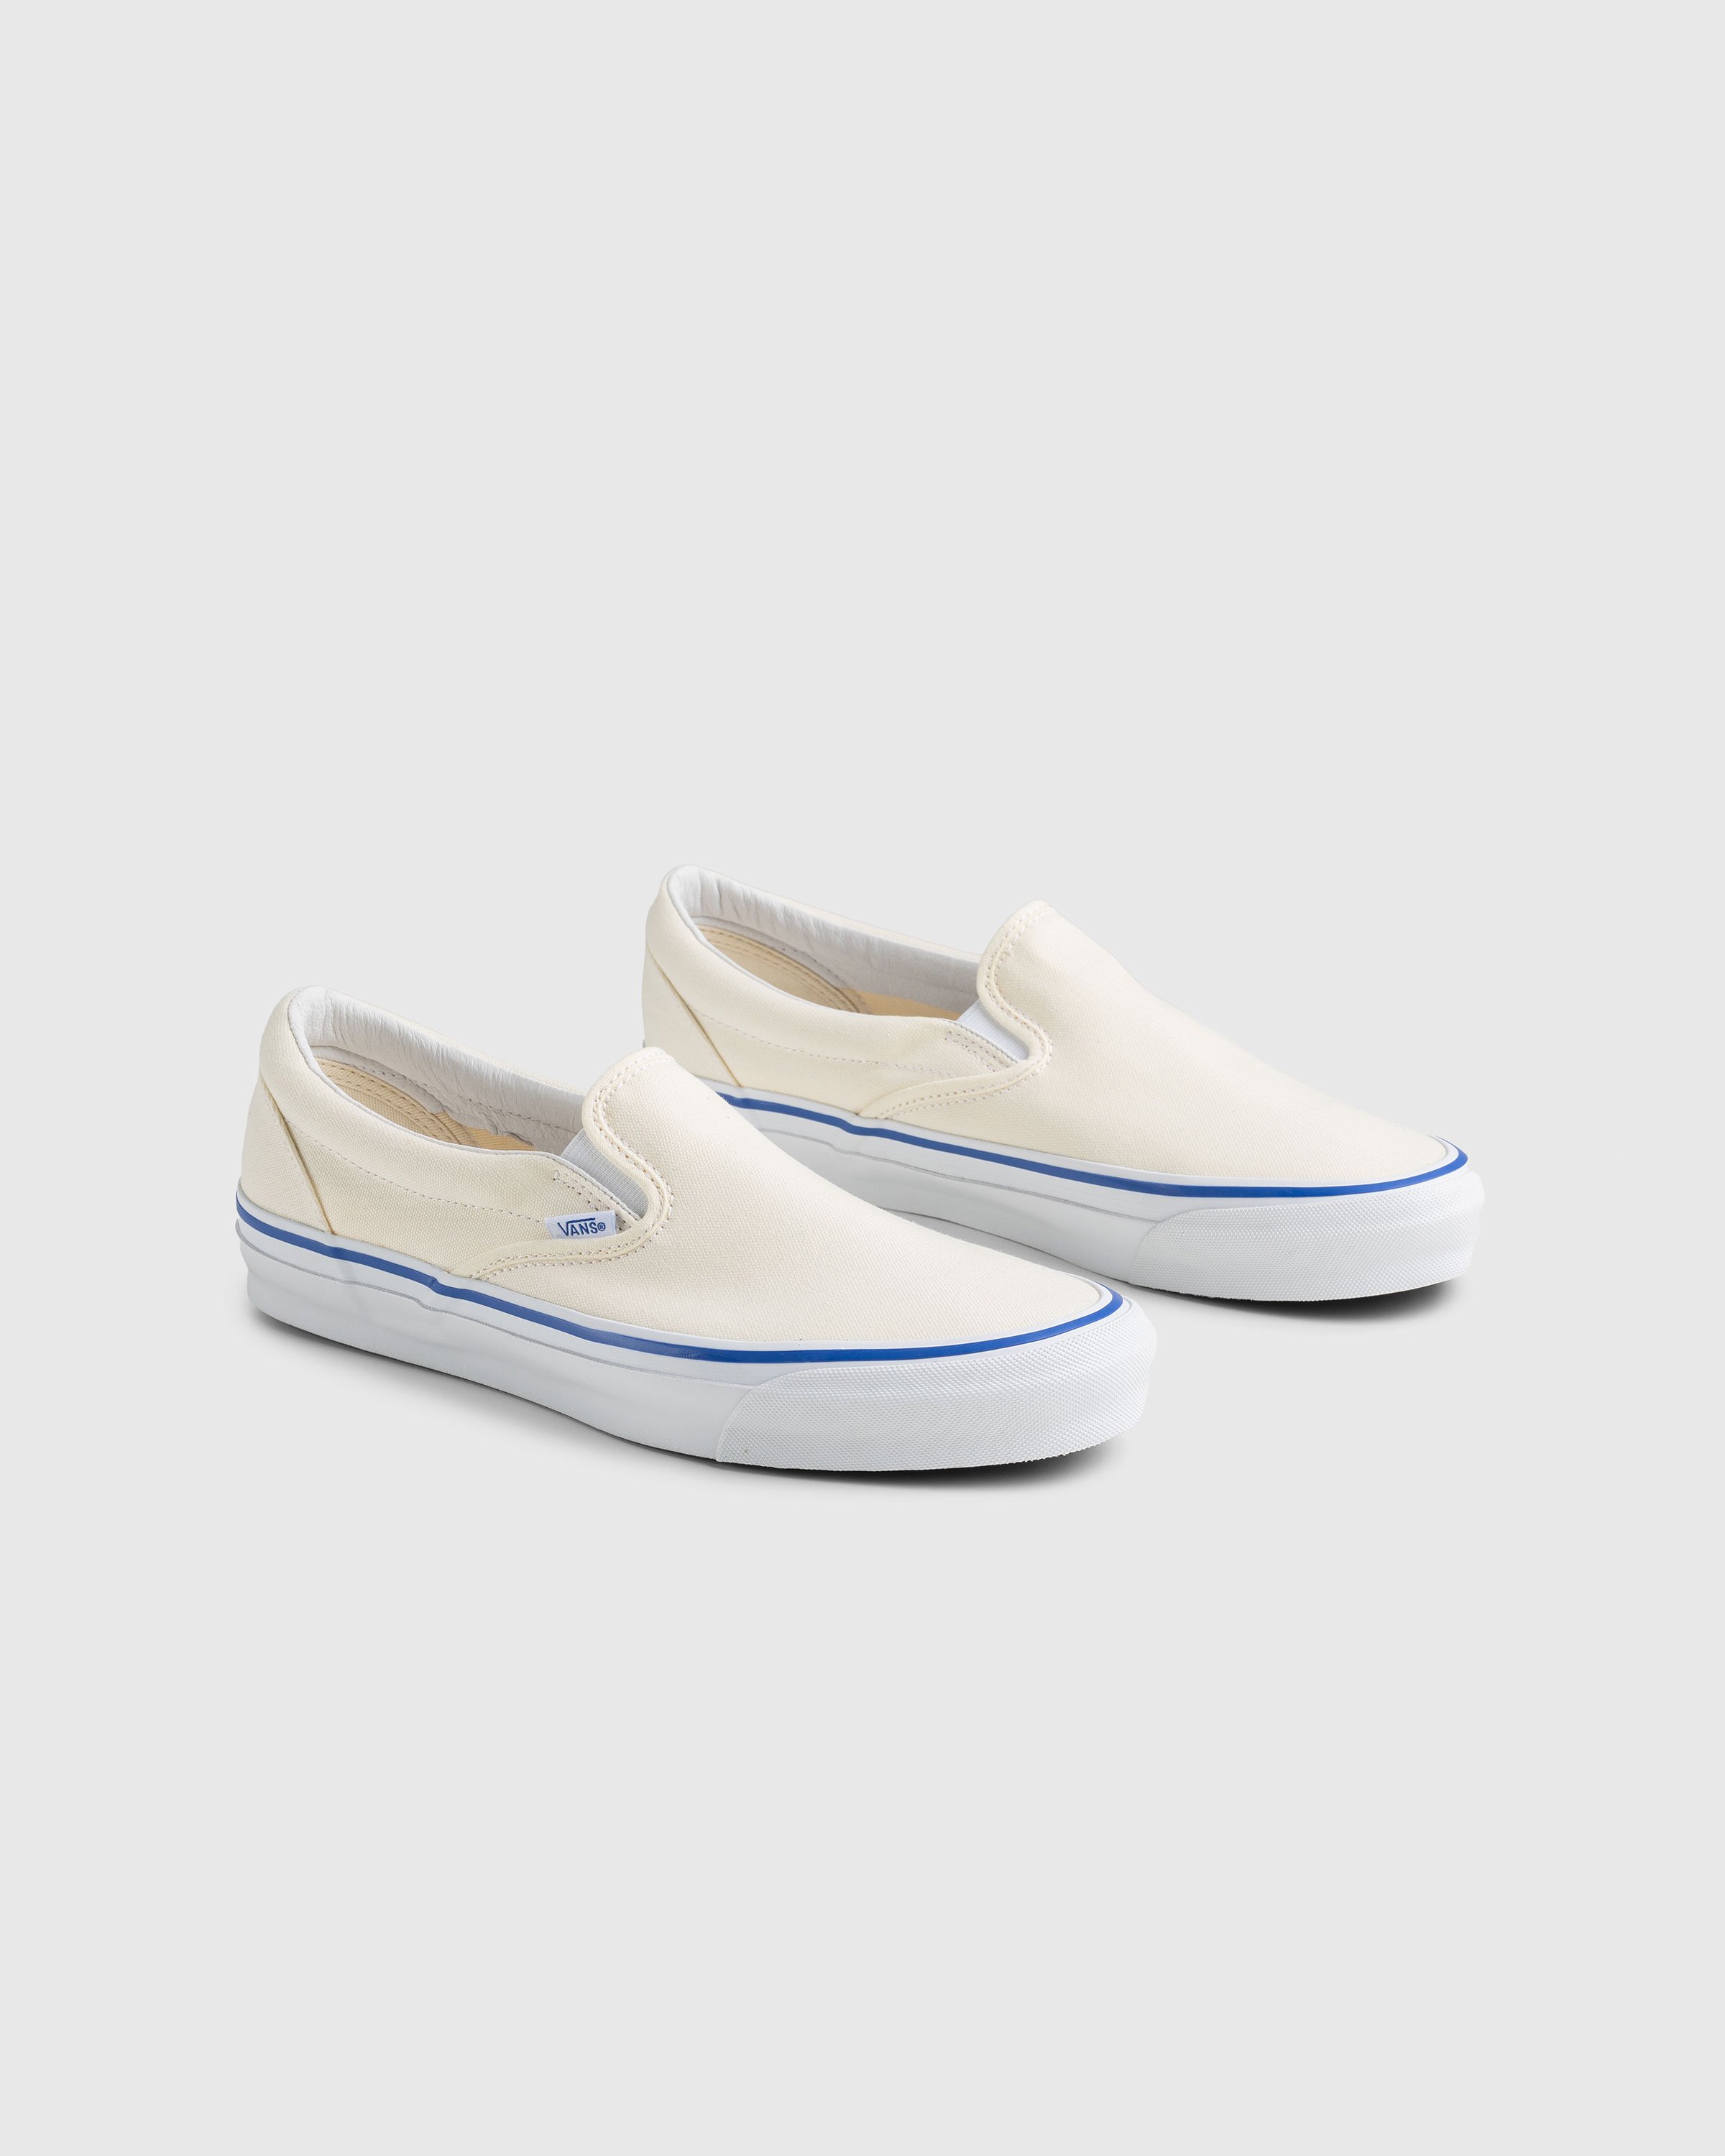 Vans - Classic Slip-On LX Classic White - Footwear - White - Image 3